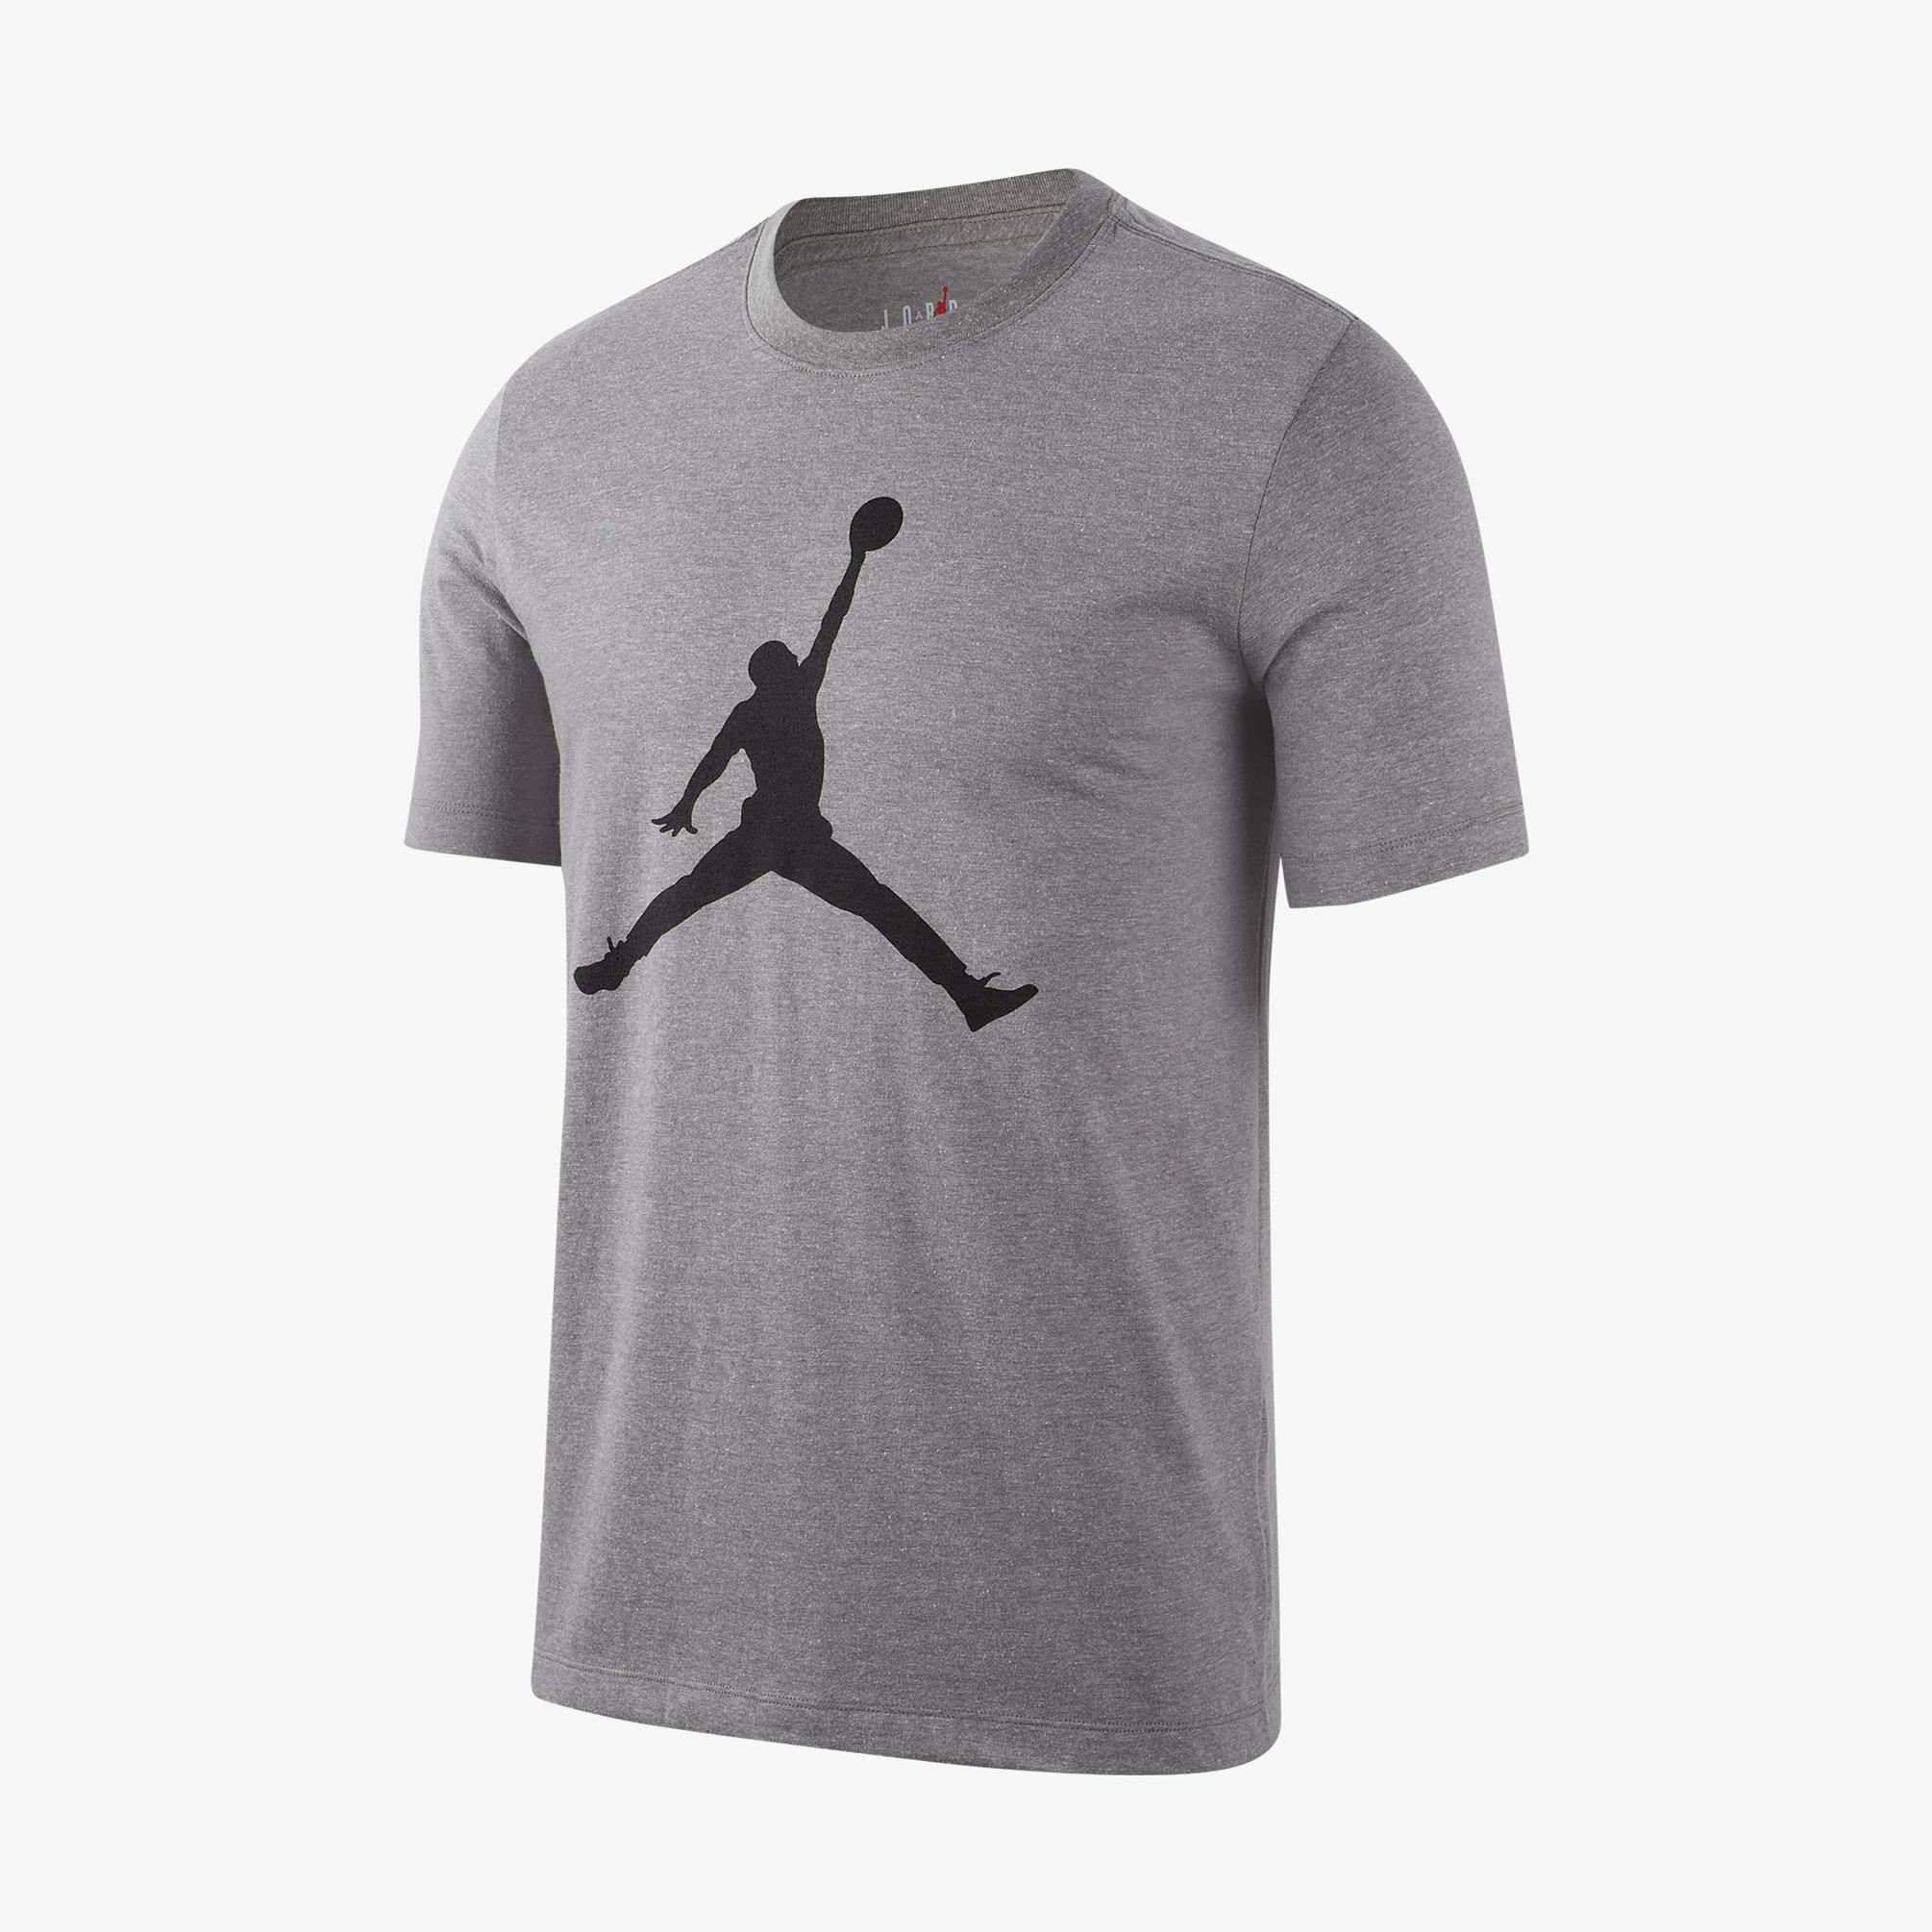  Jordan Jumpman Crew Erkek Gri T-shirt